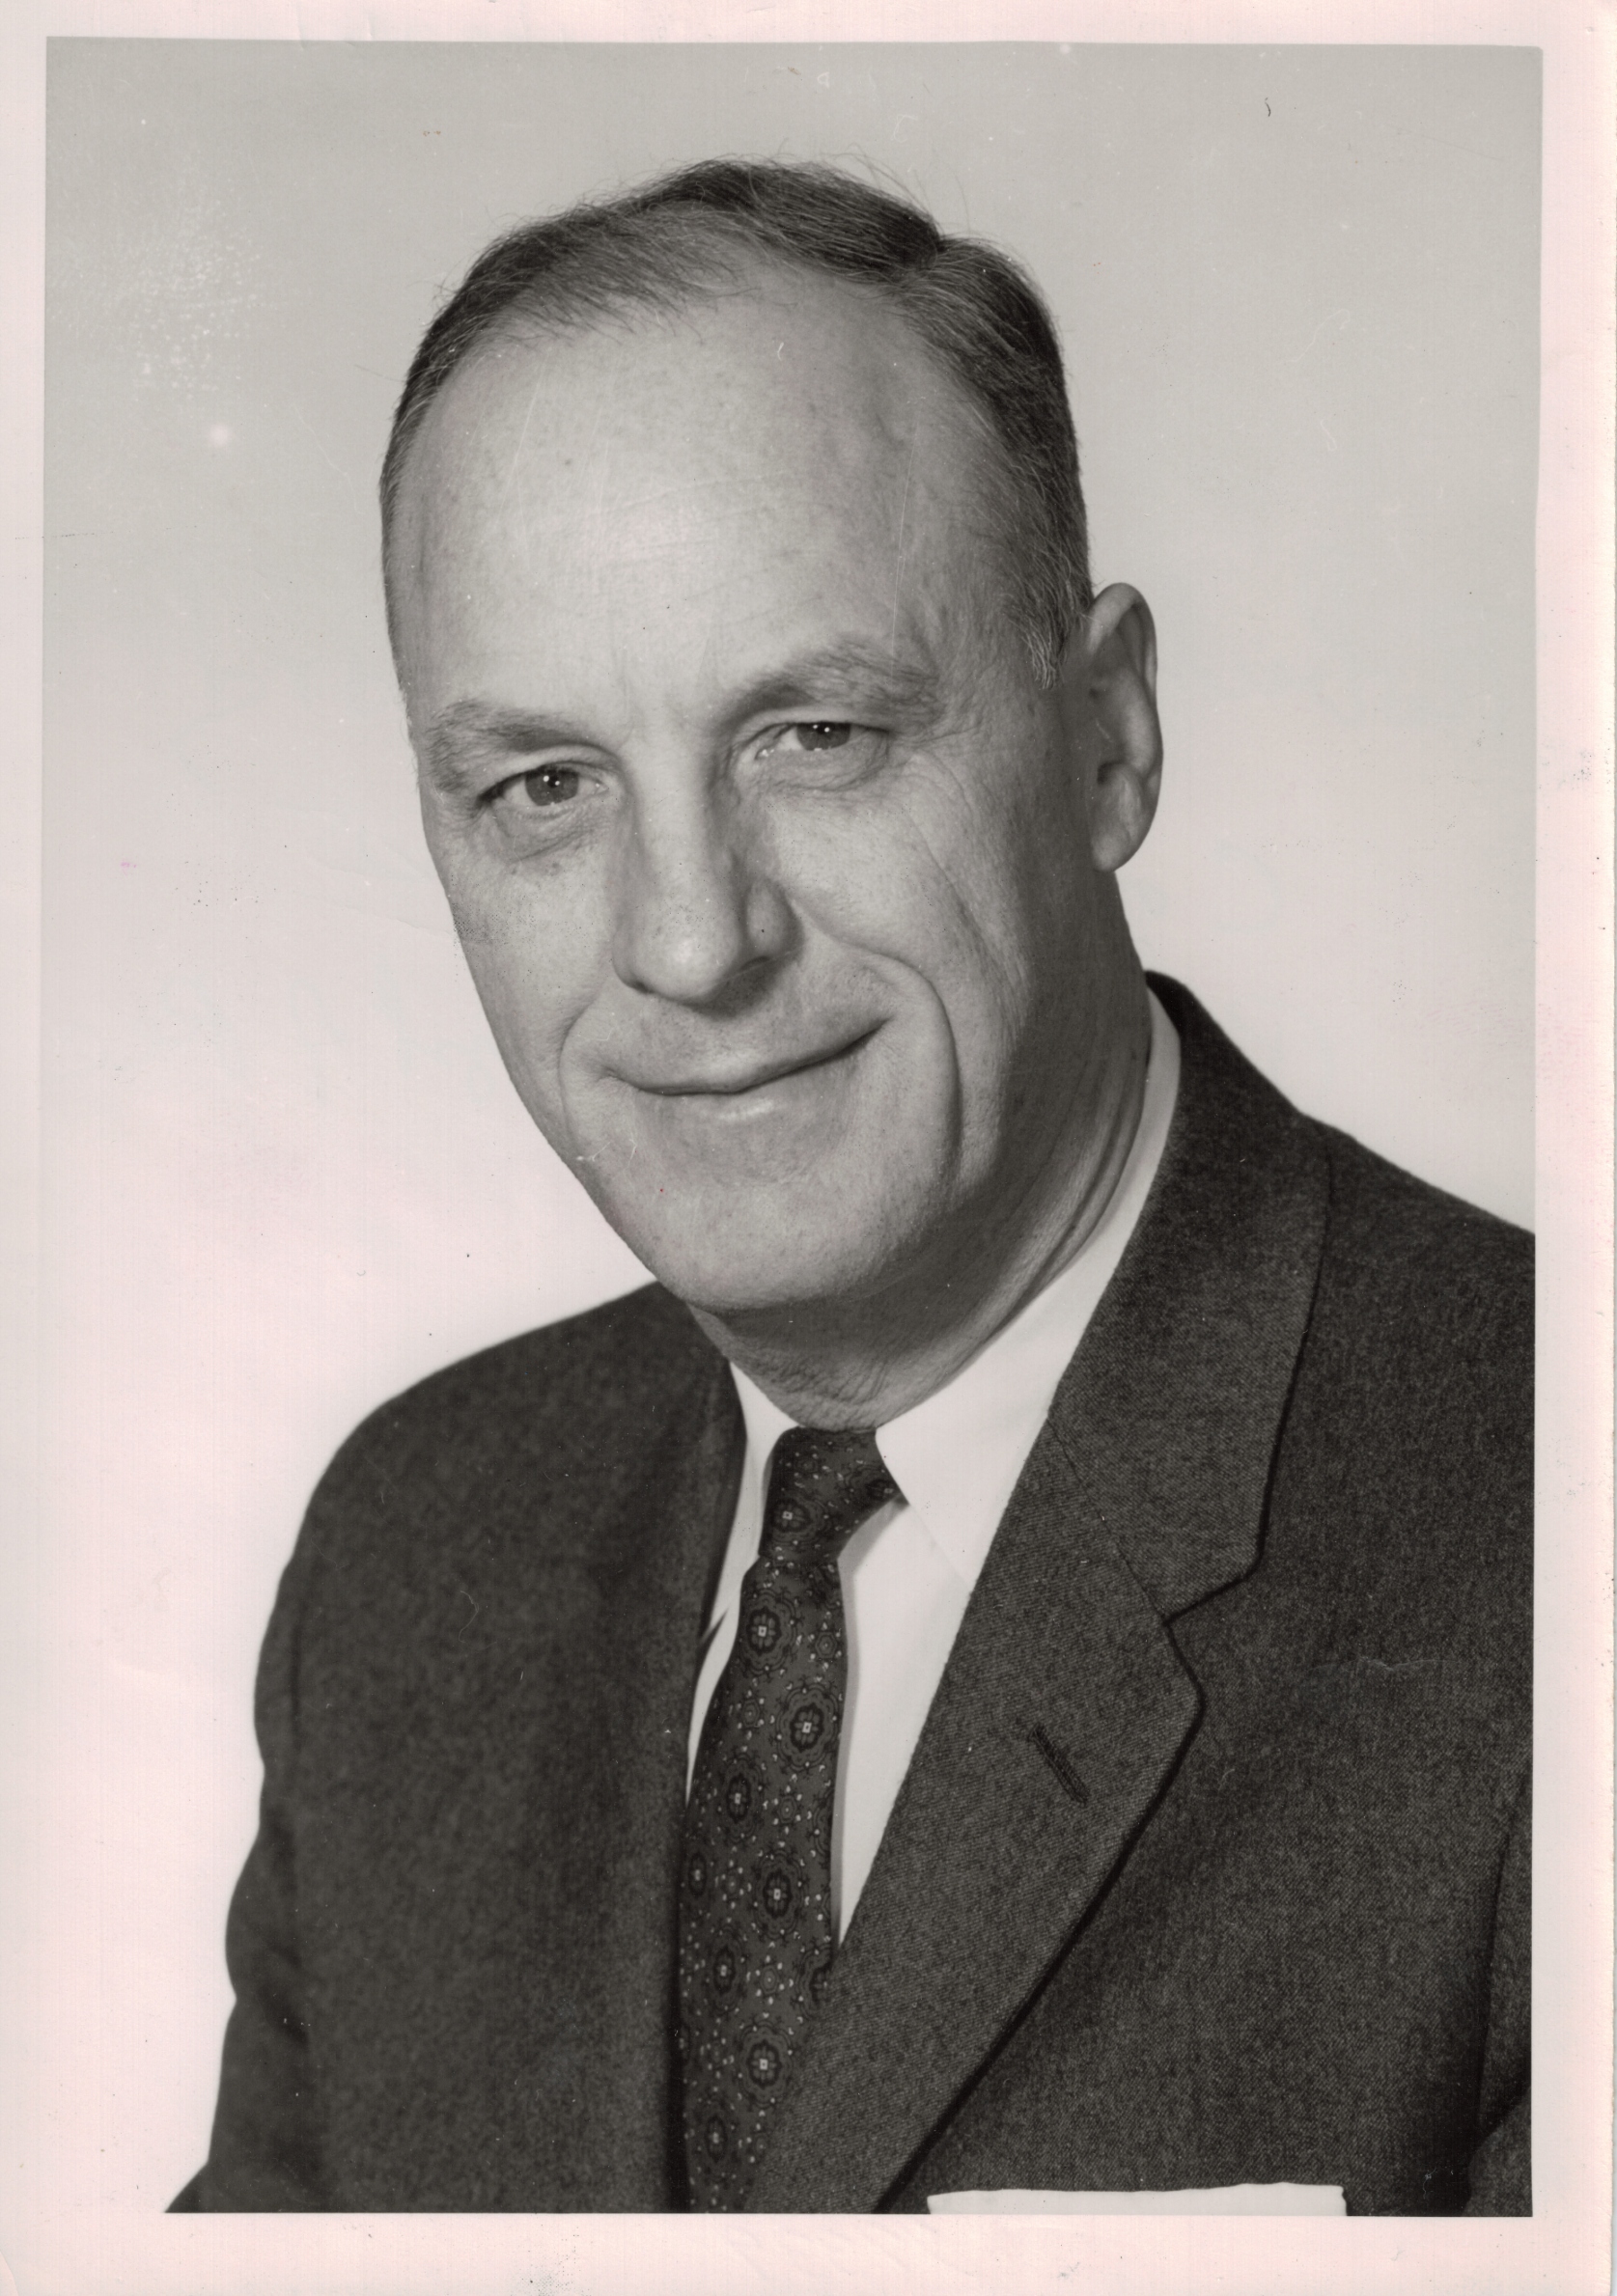 Commissioner Robert W. Crawford